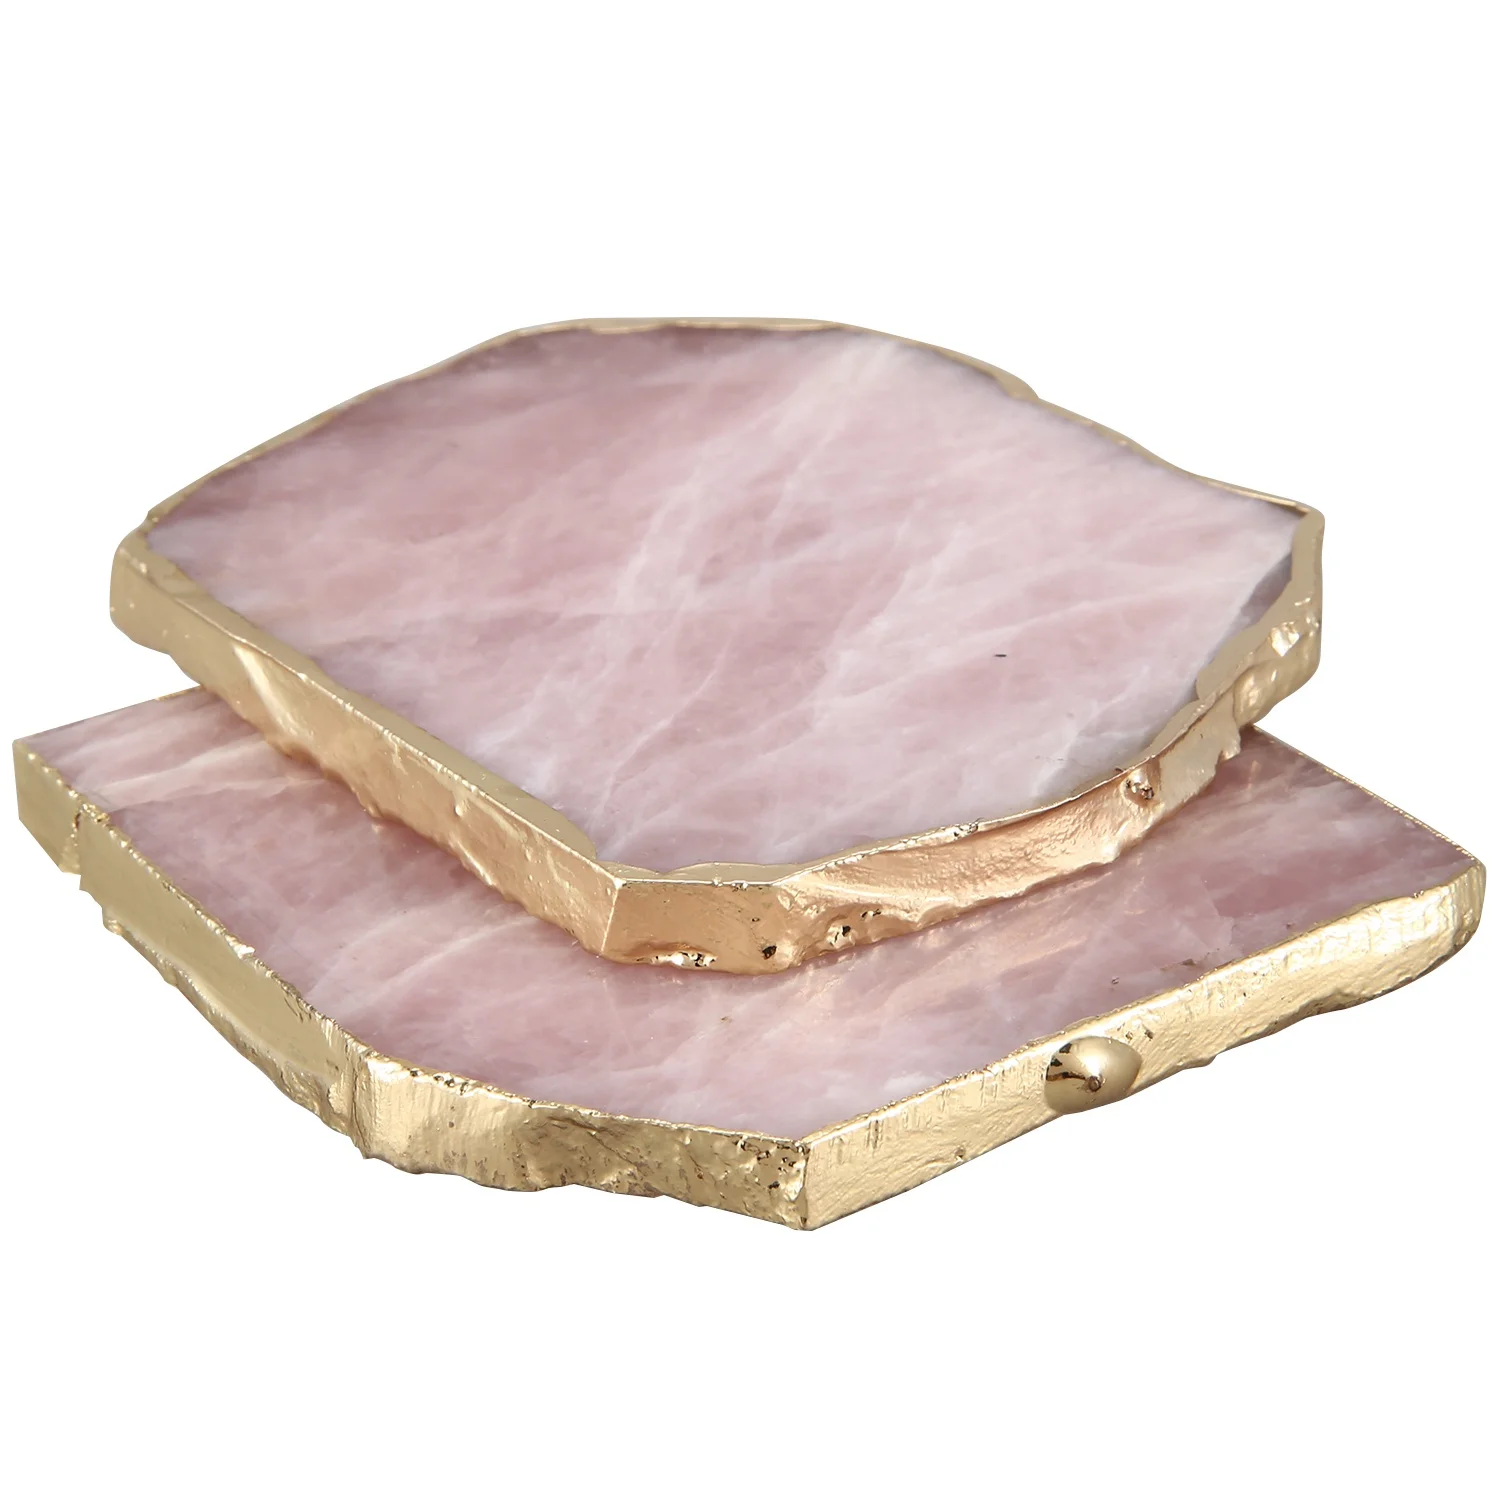 

2Pcs Agate Slice Pink Agate Coaster Teacup Tray Decorative Design Stone Coaster Gold Edges Home Decor Gemstone Coaster Natura